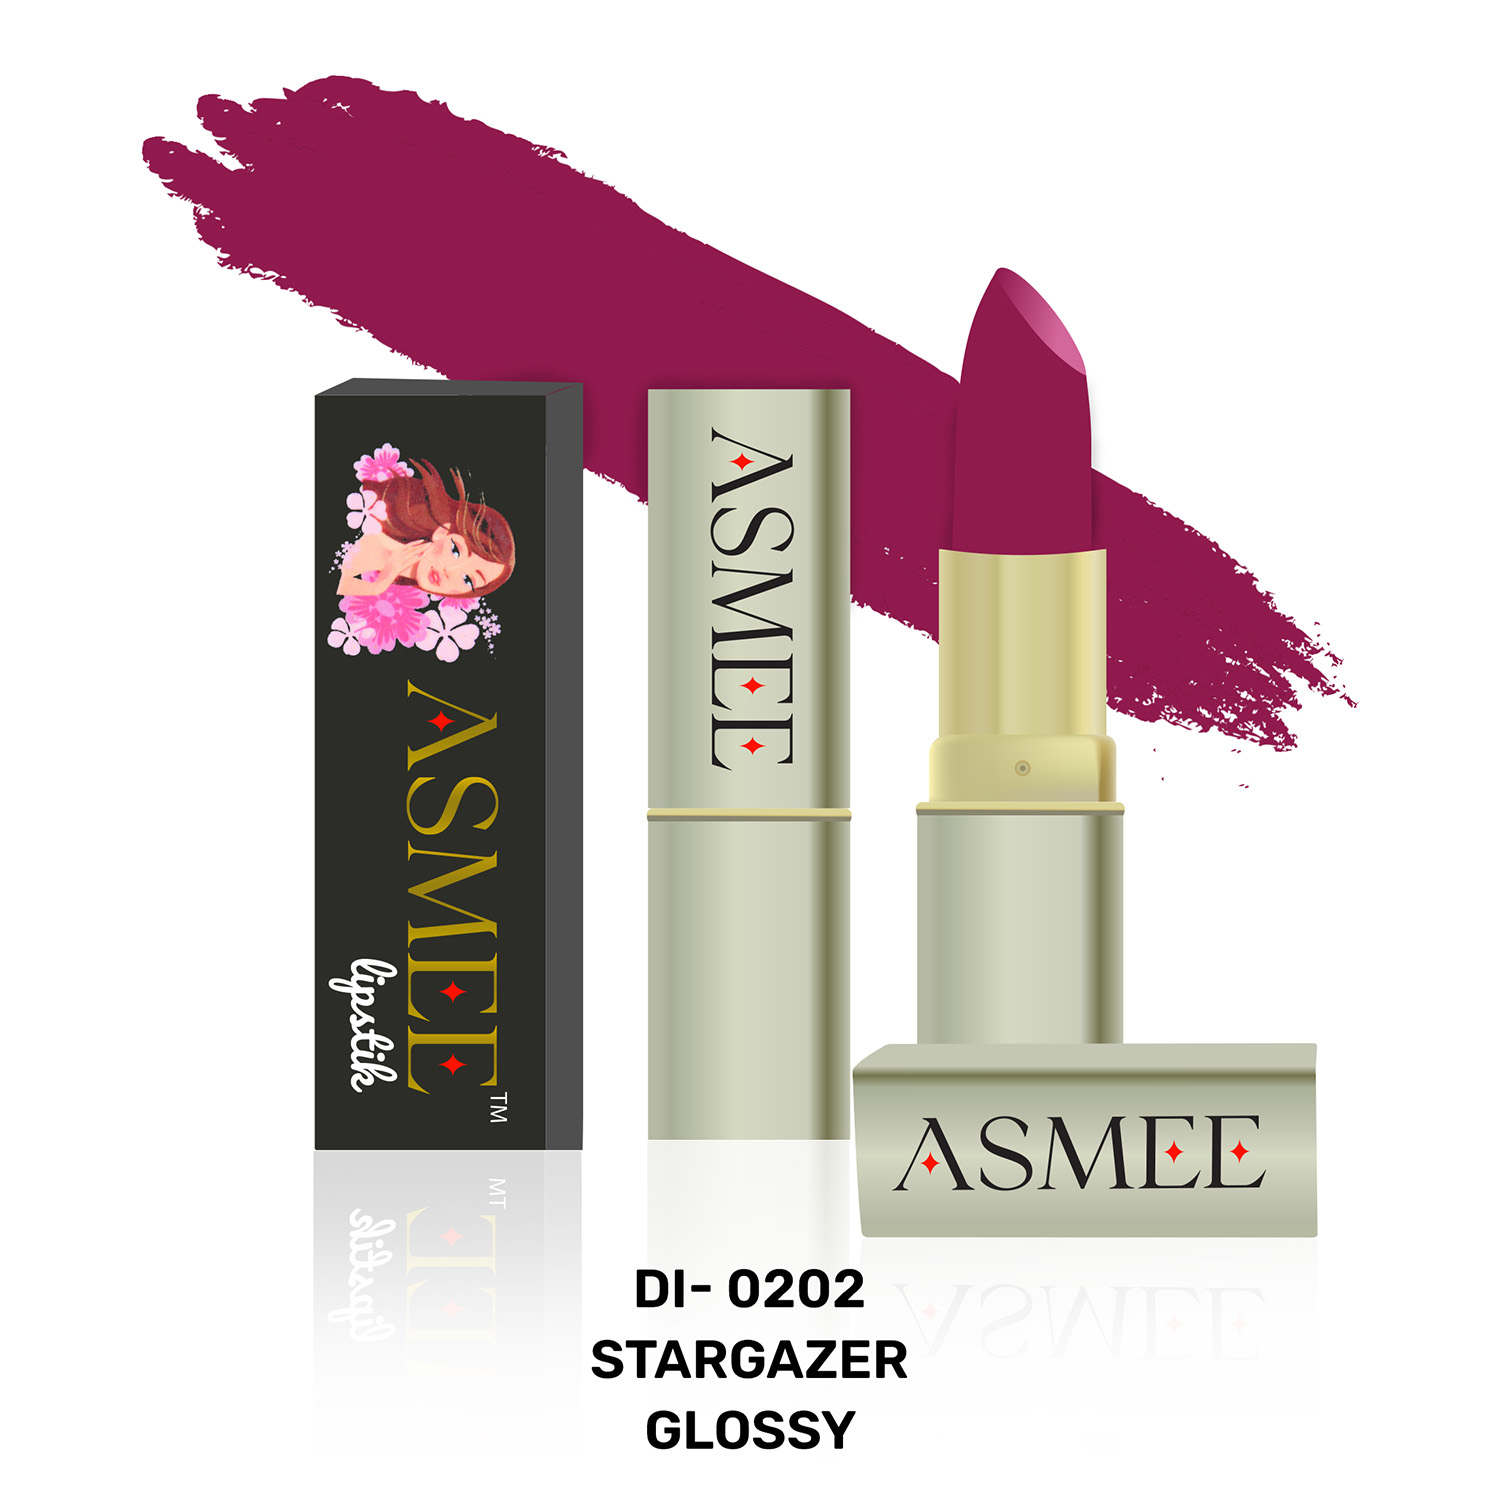 Asmee Glossy Lipstick, 4.2gm - DI-0202 Stargazer